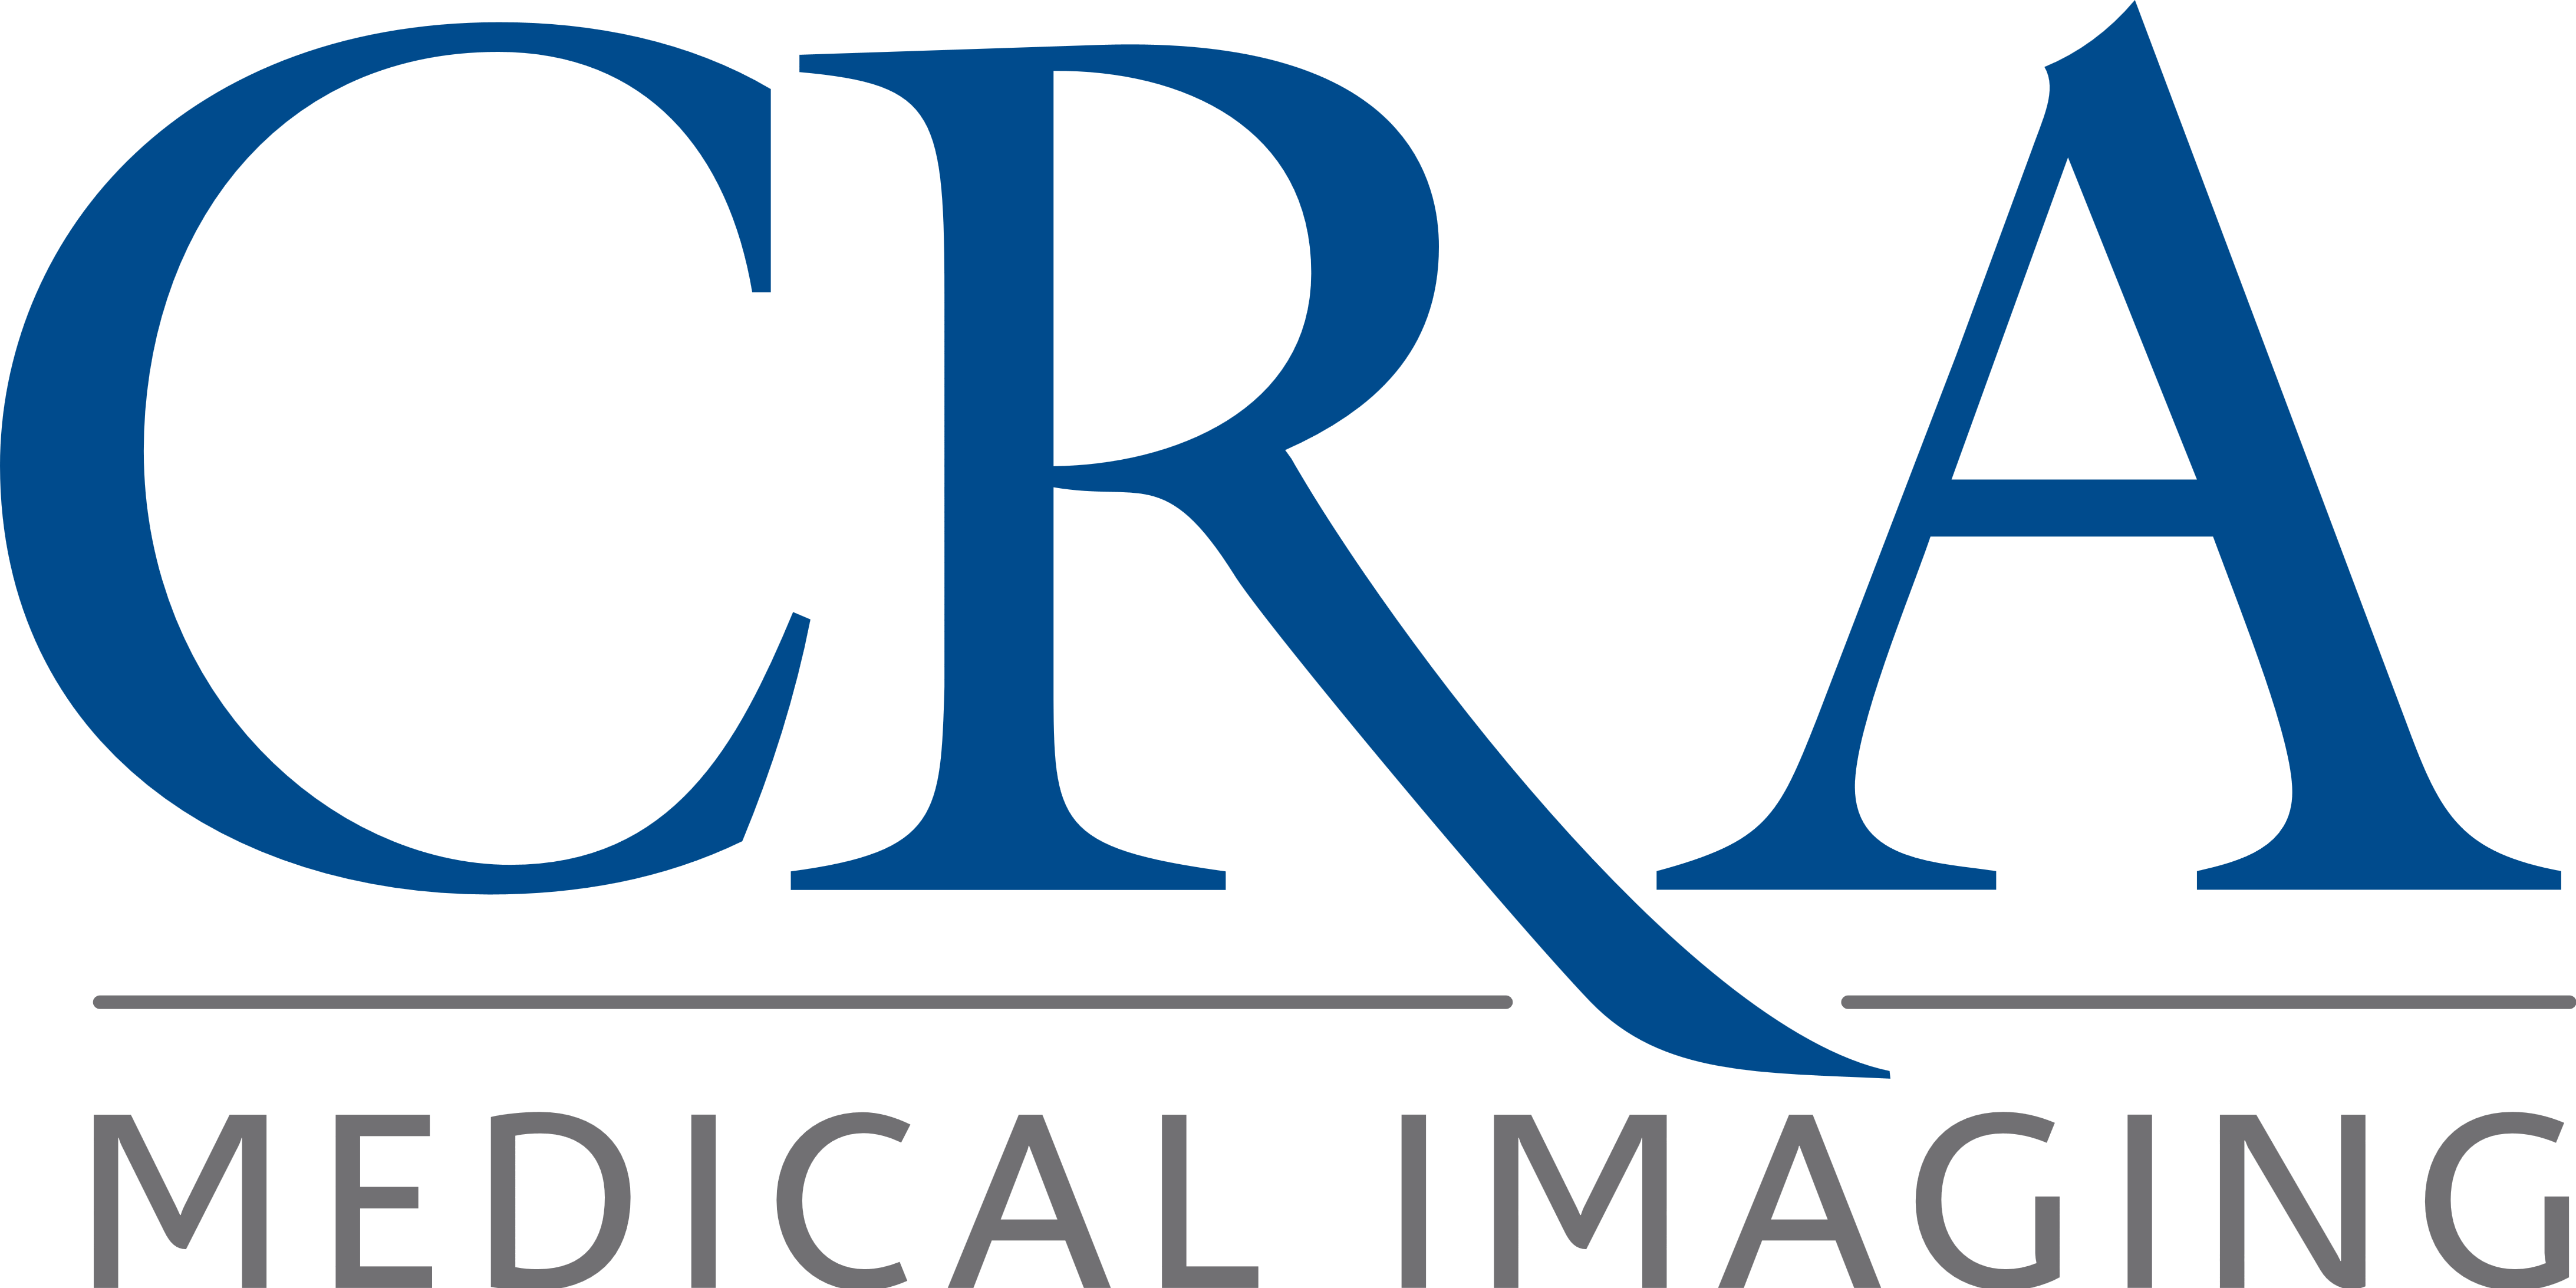 Download Cra Medical Imaging Logo Png Image With No Background Pngkey Com